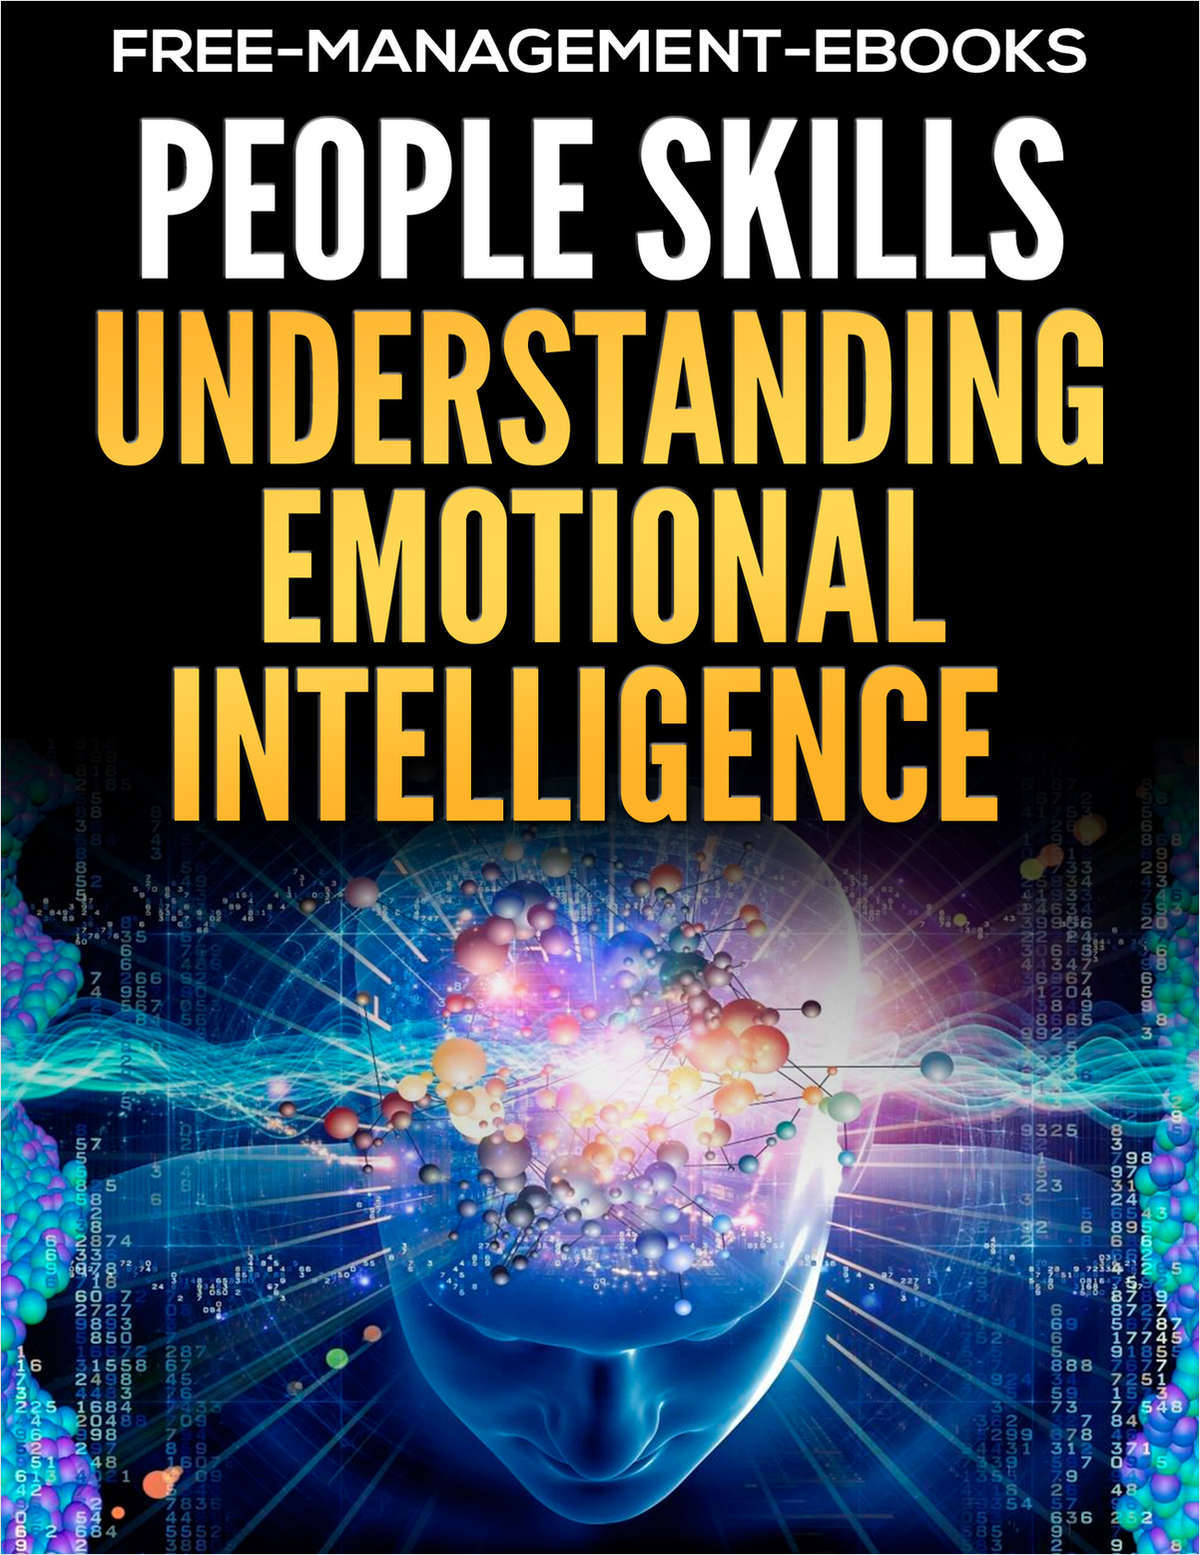 Understanding Emotional Intelligence -- Developing Your People Skills